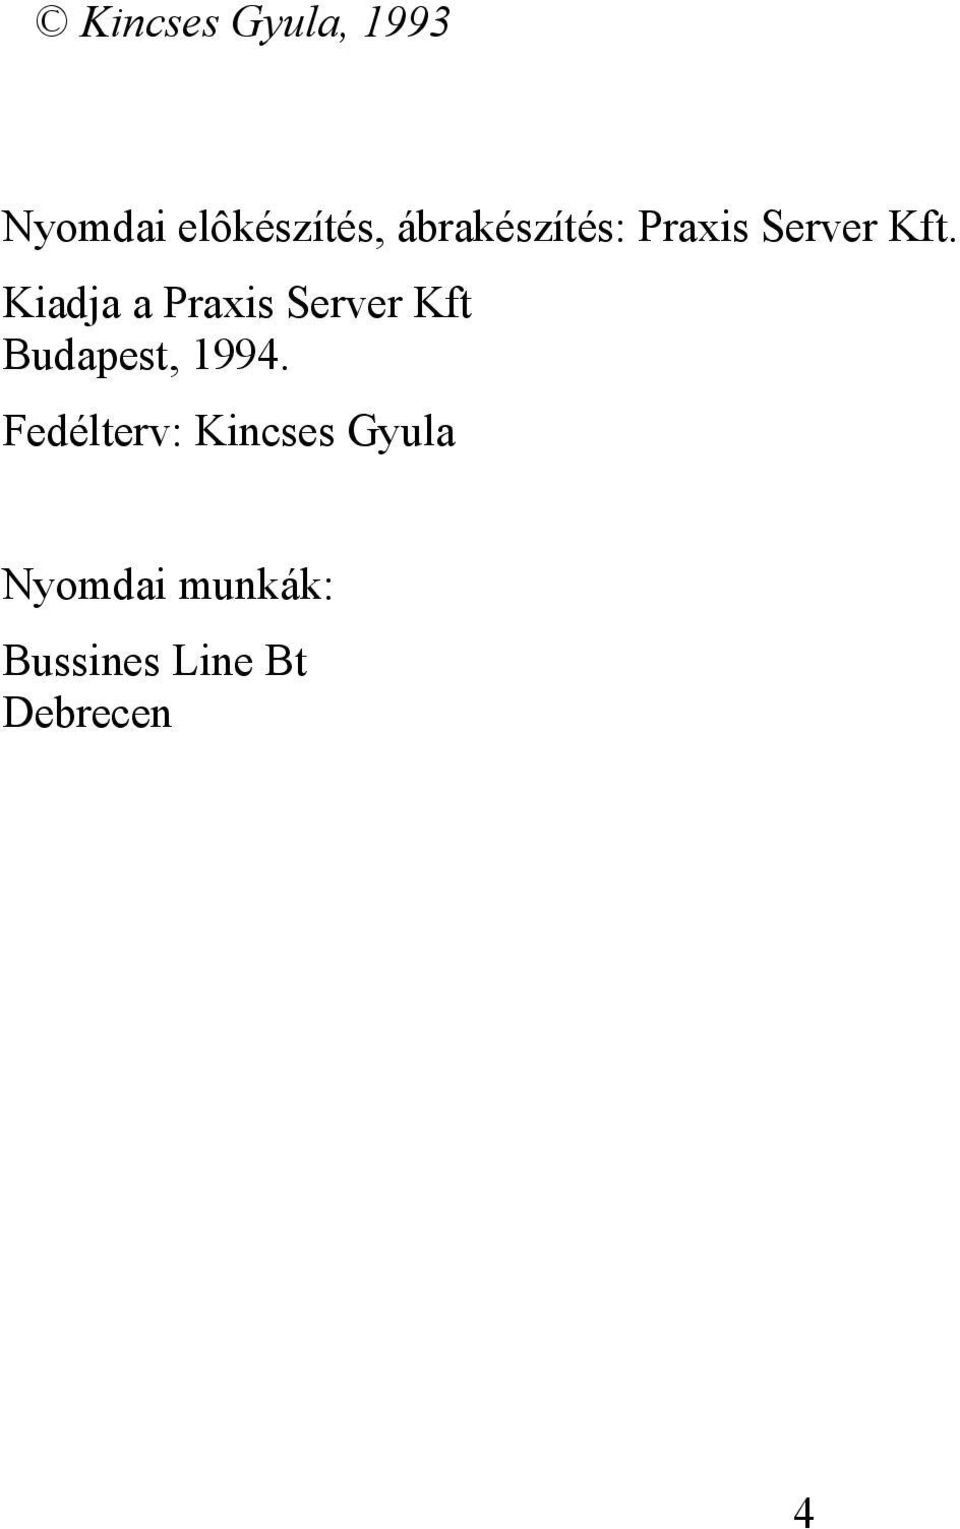 Kiadja a Praxis Server Kft Budapest, 1994.